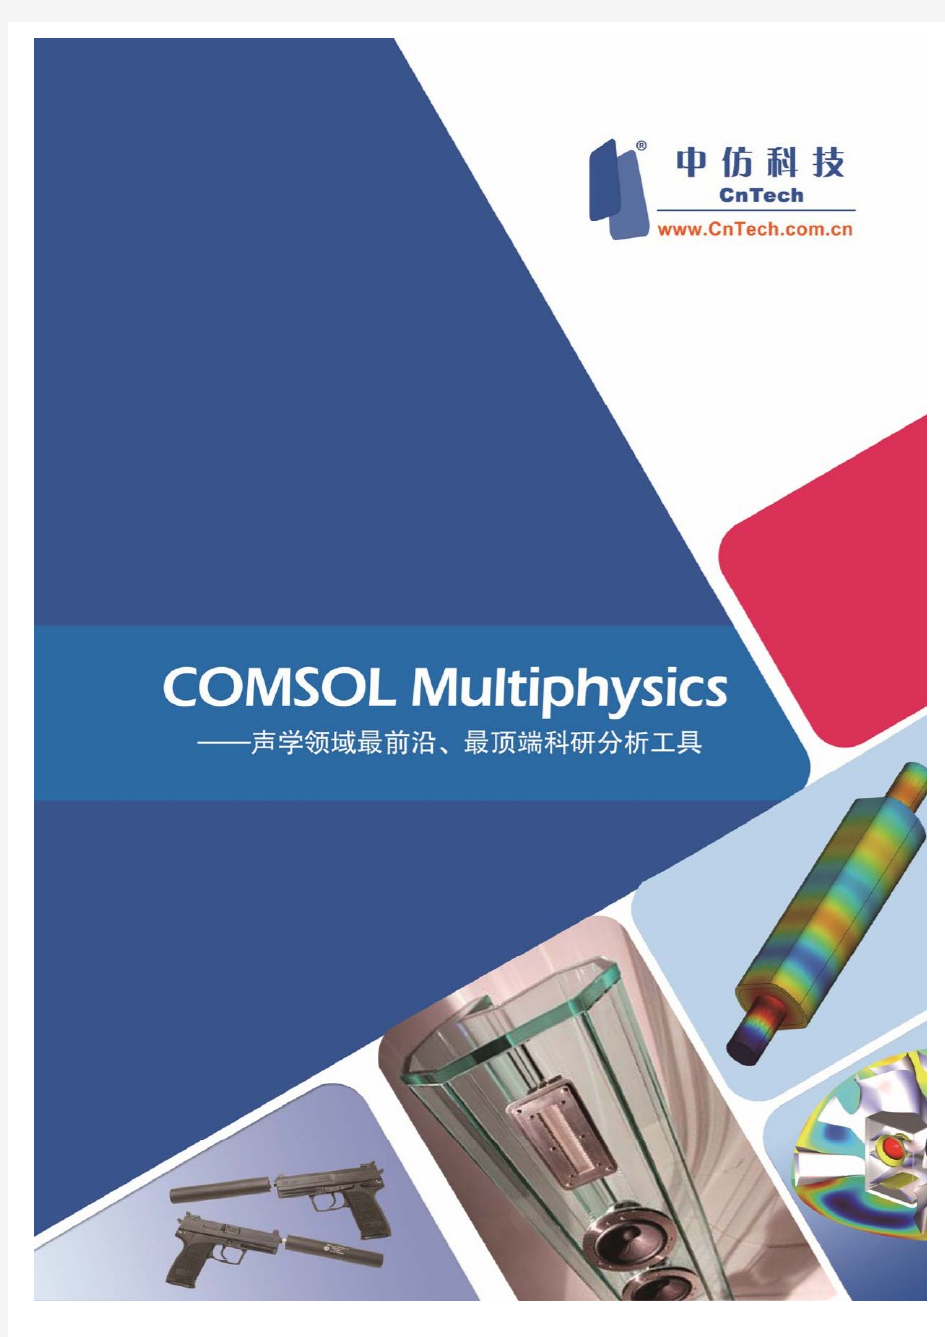 COMSOL Multiphysics 在声学领域的应用案例集